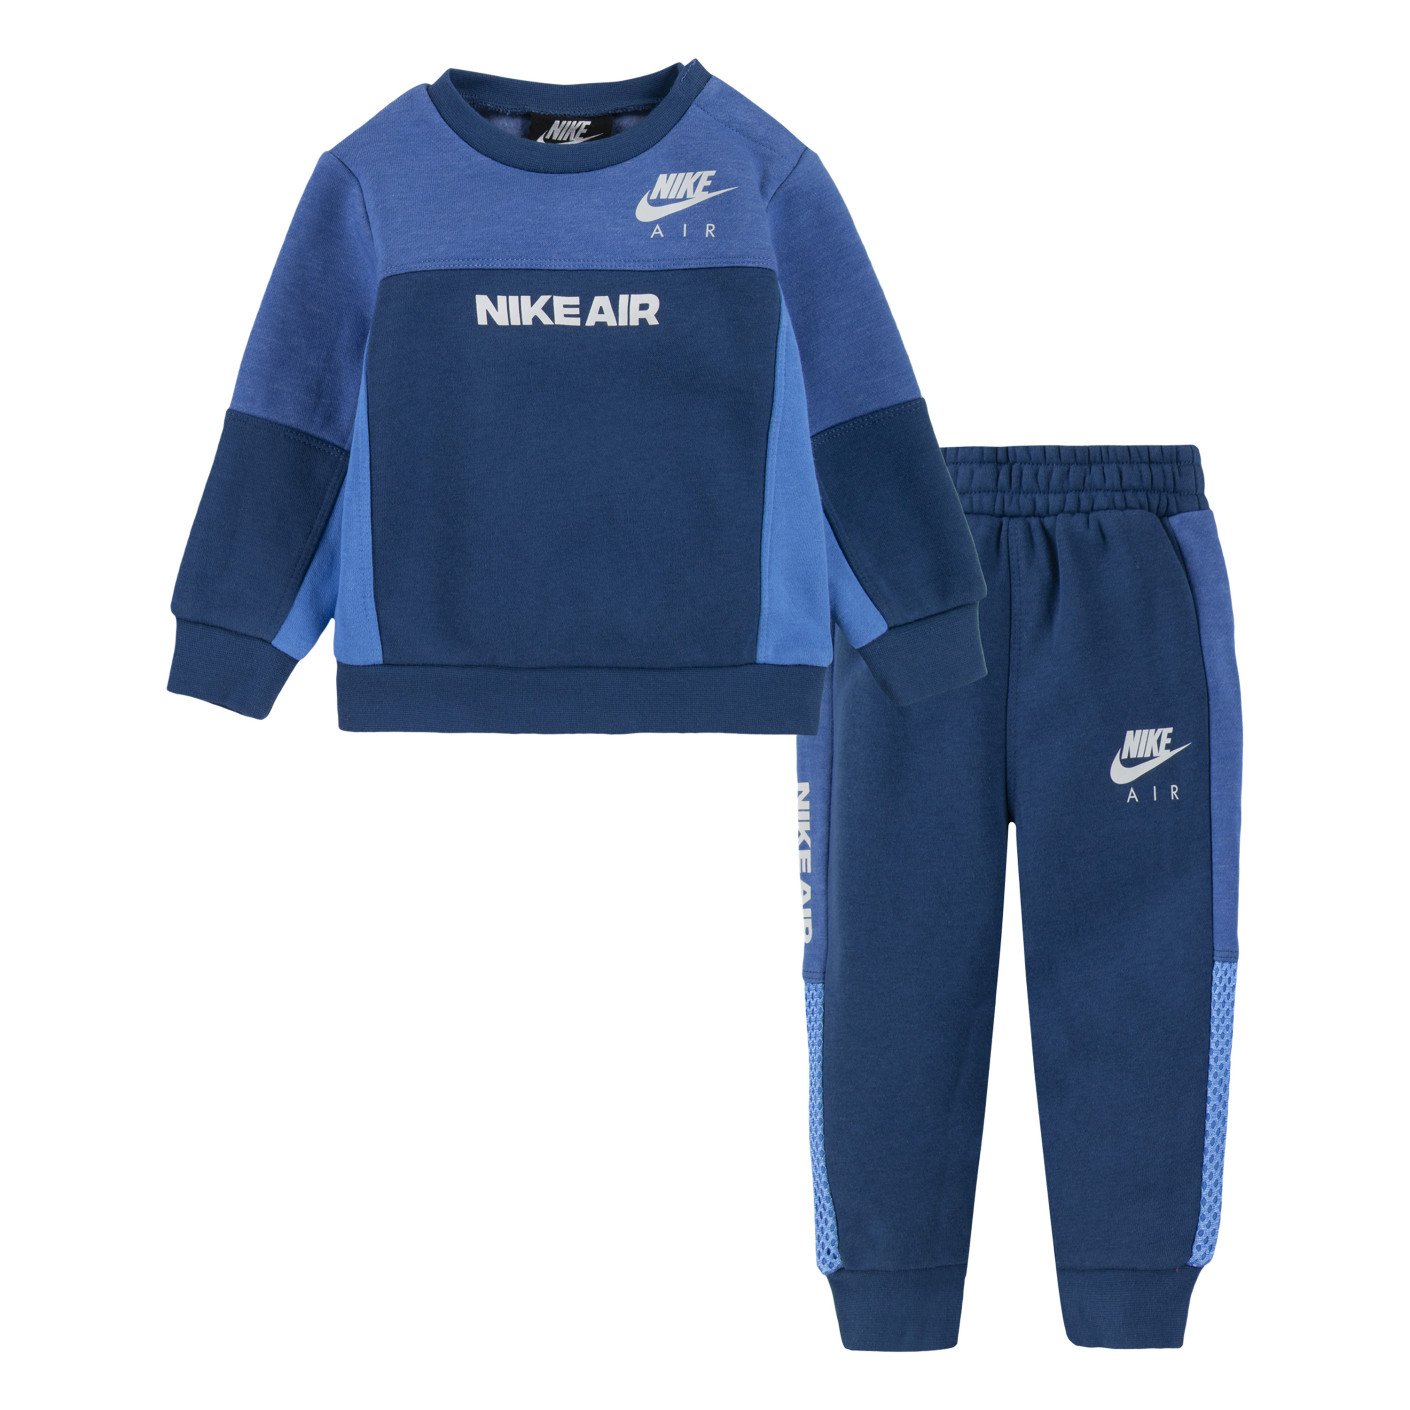 hardwerkend Communisme Nuttig Nike Sportswear Air Crew Trainingspak Baby Donkerblauw